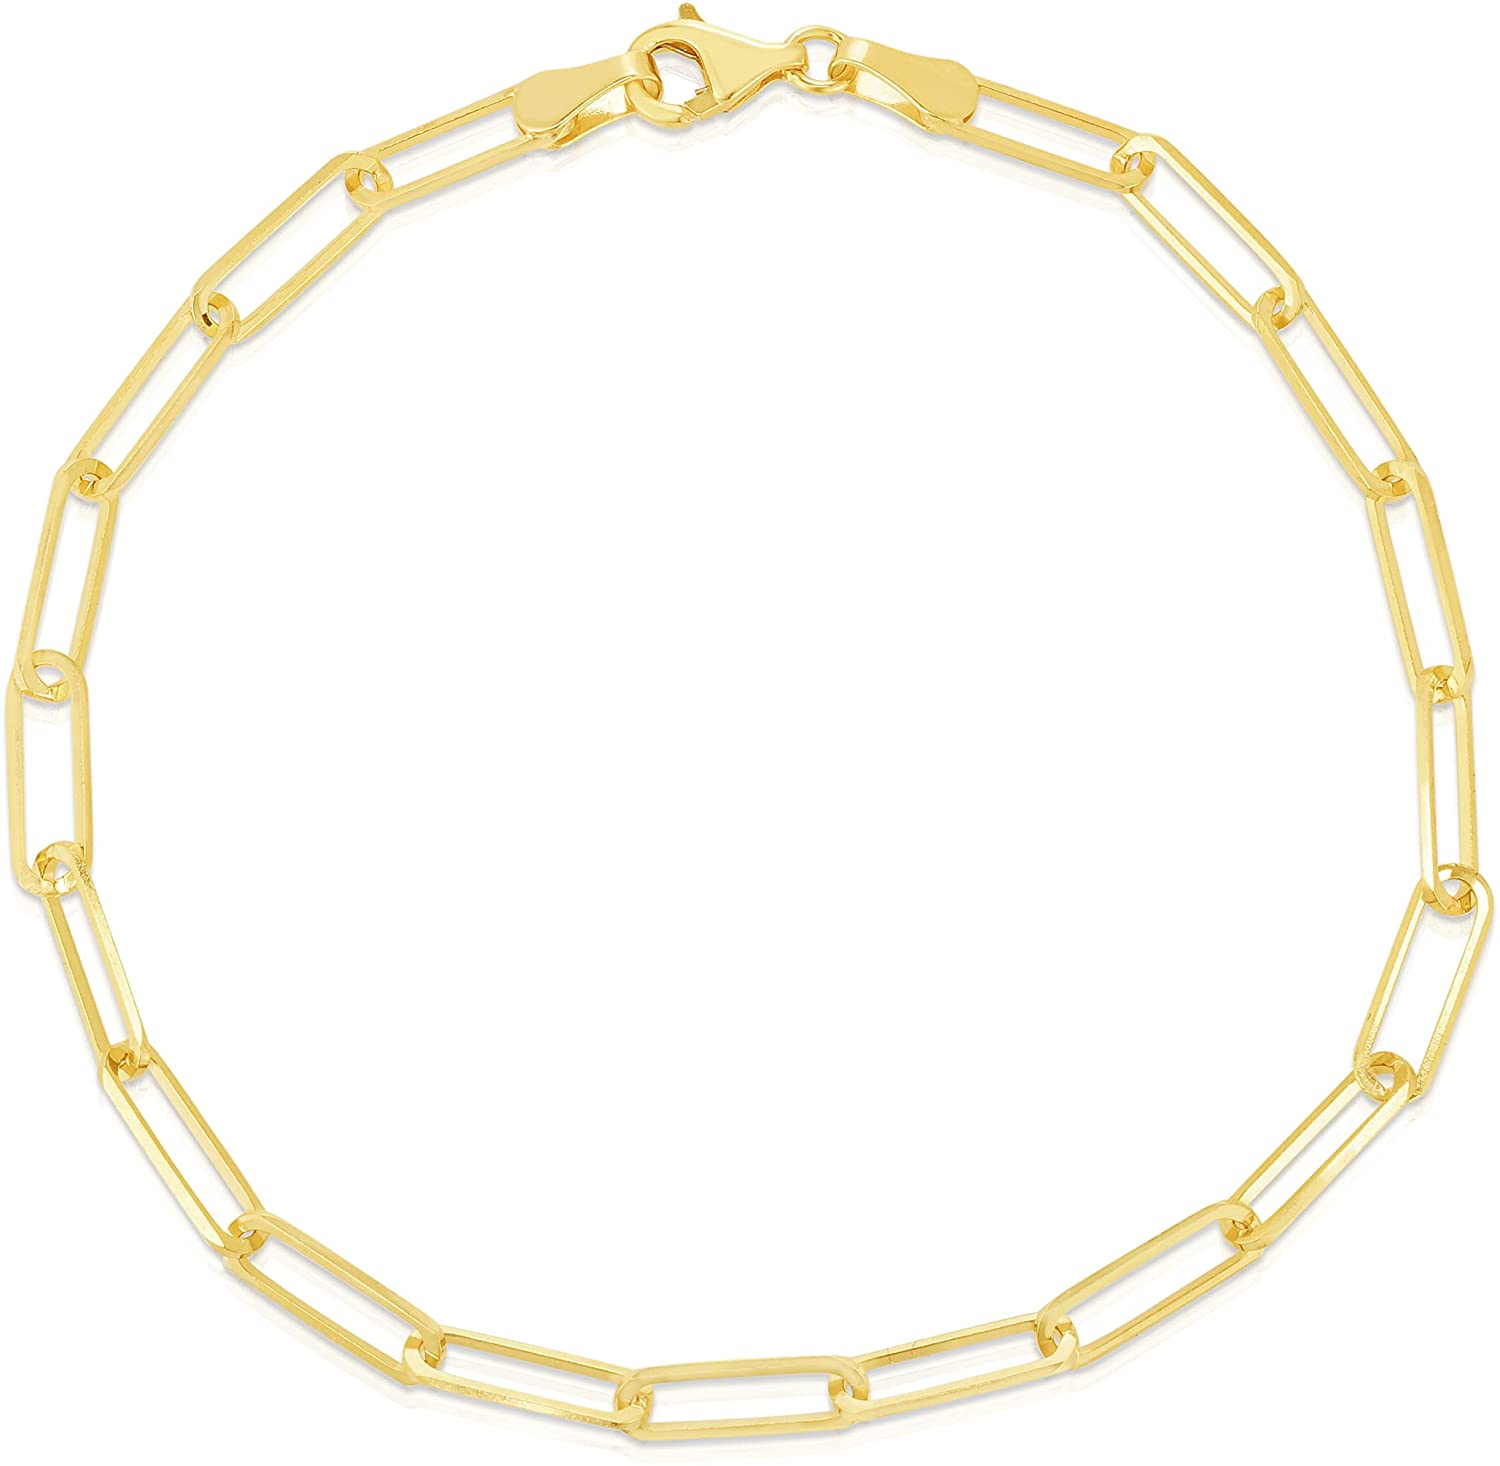 10k Yellow Gold Paperclip Link Bracelet or Anklet